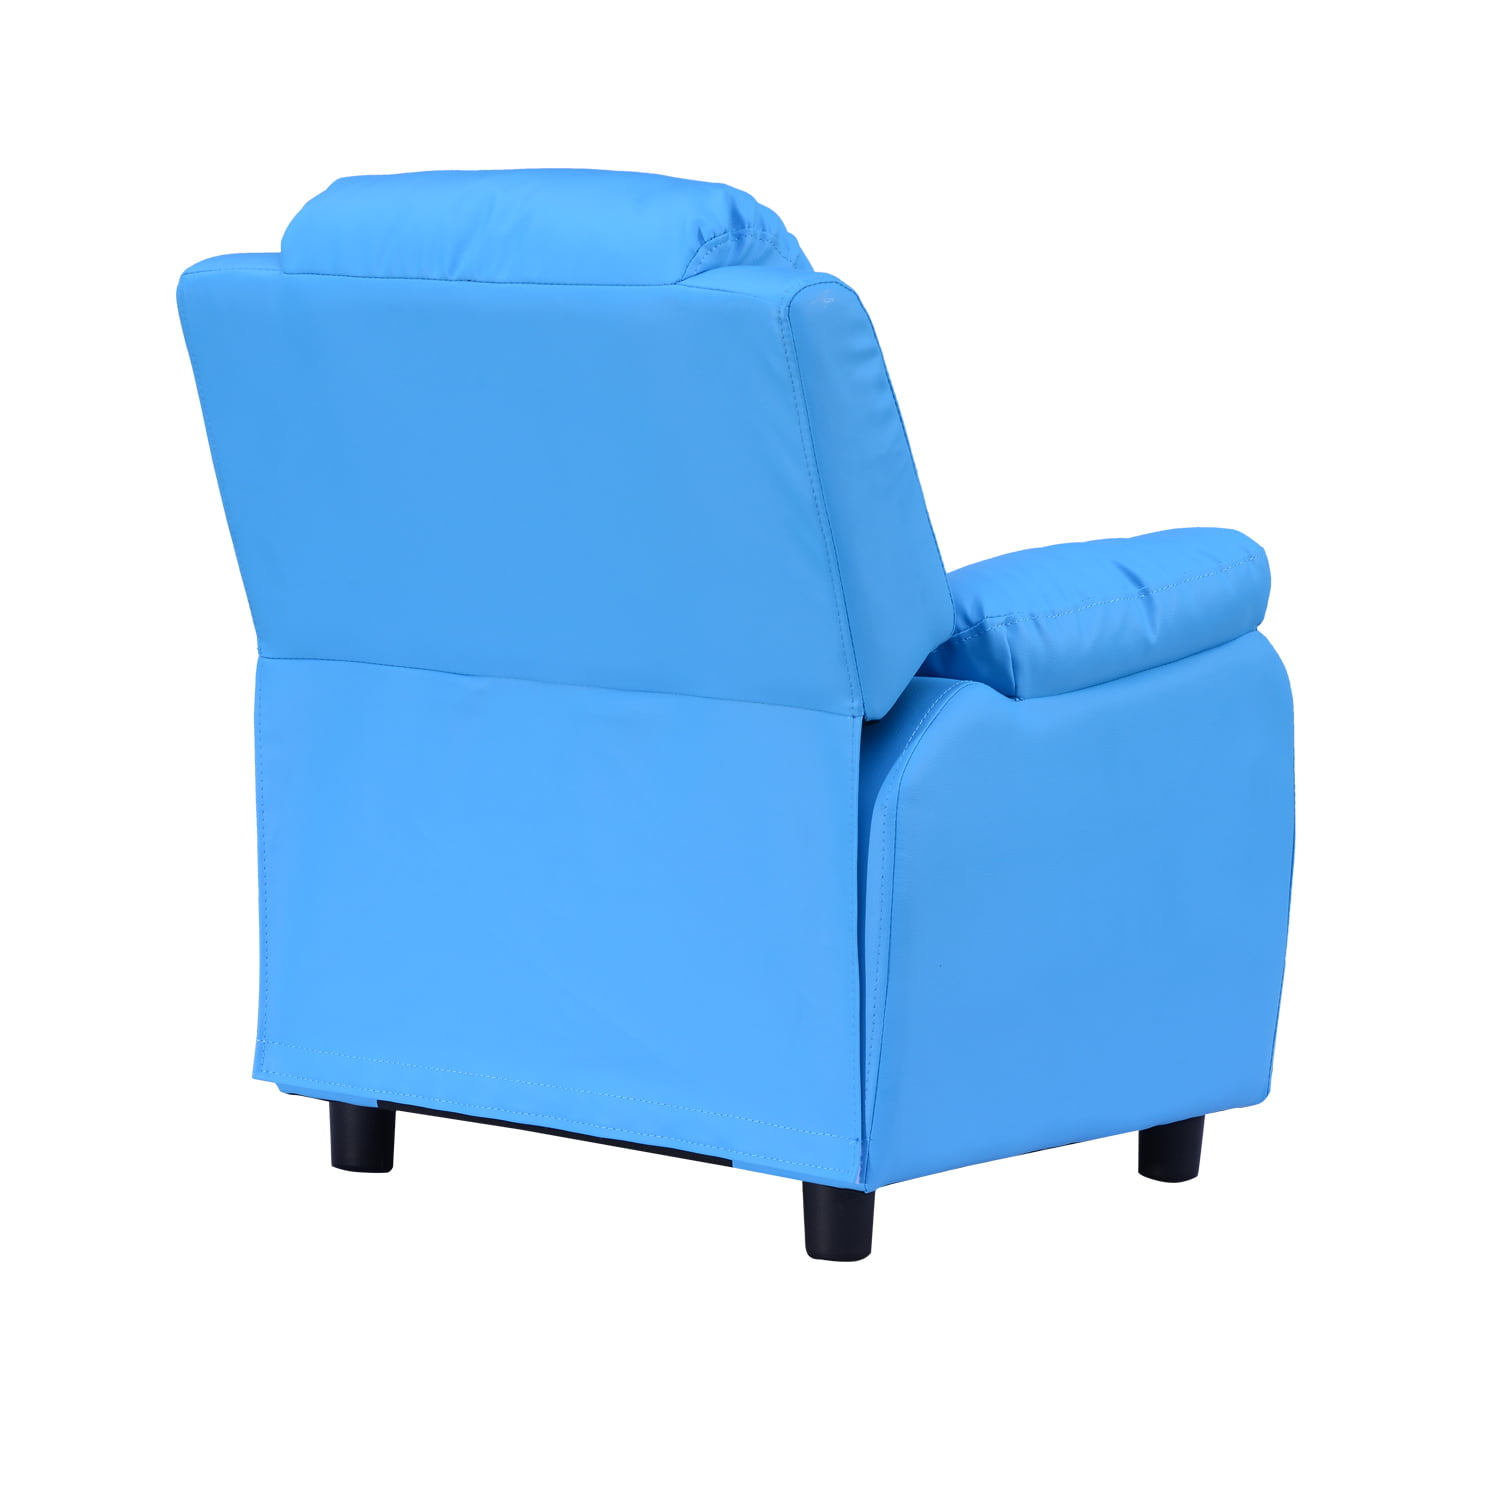 Blue Children Recliner Kids Sofa Armchair Room Furniture w/ Storage Arms 